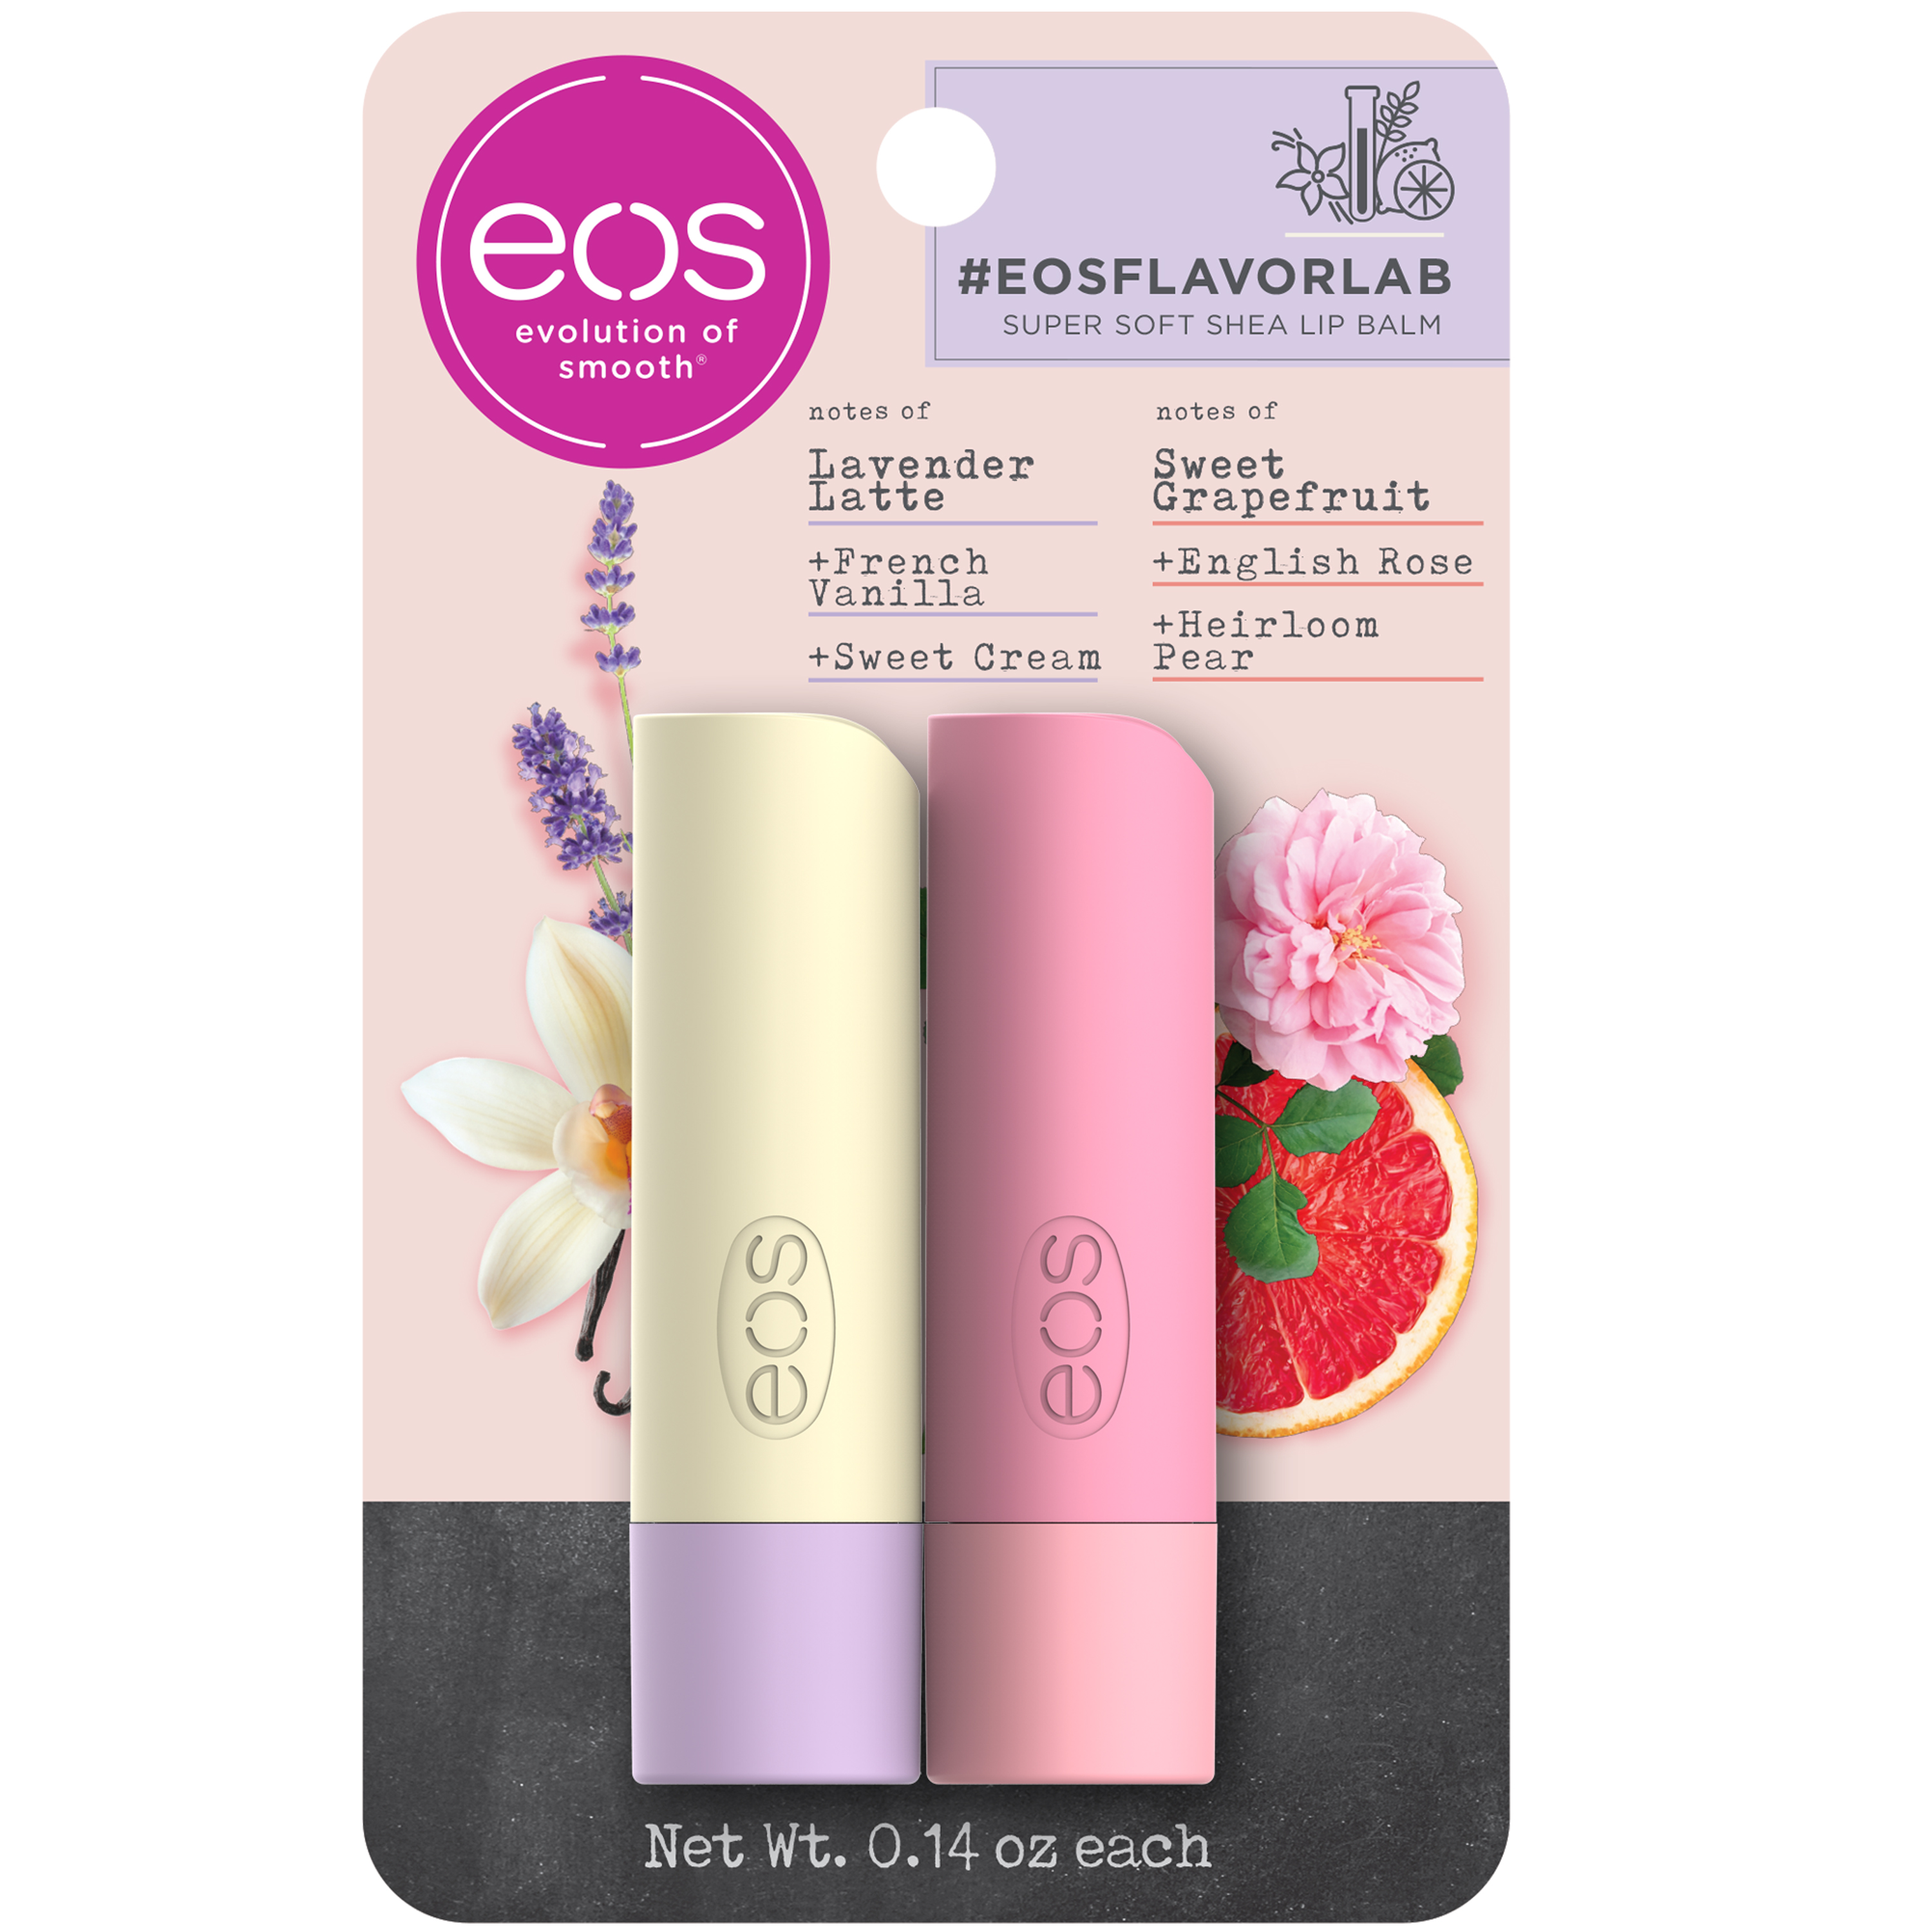 eos flavorlab Stick Lip Balm - Lavender Latte and Sweet Grapefruit | 0.14 oz - image 1 of 9